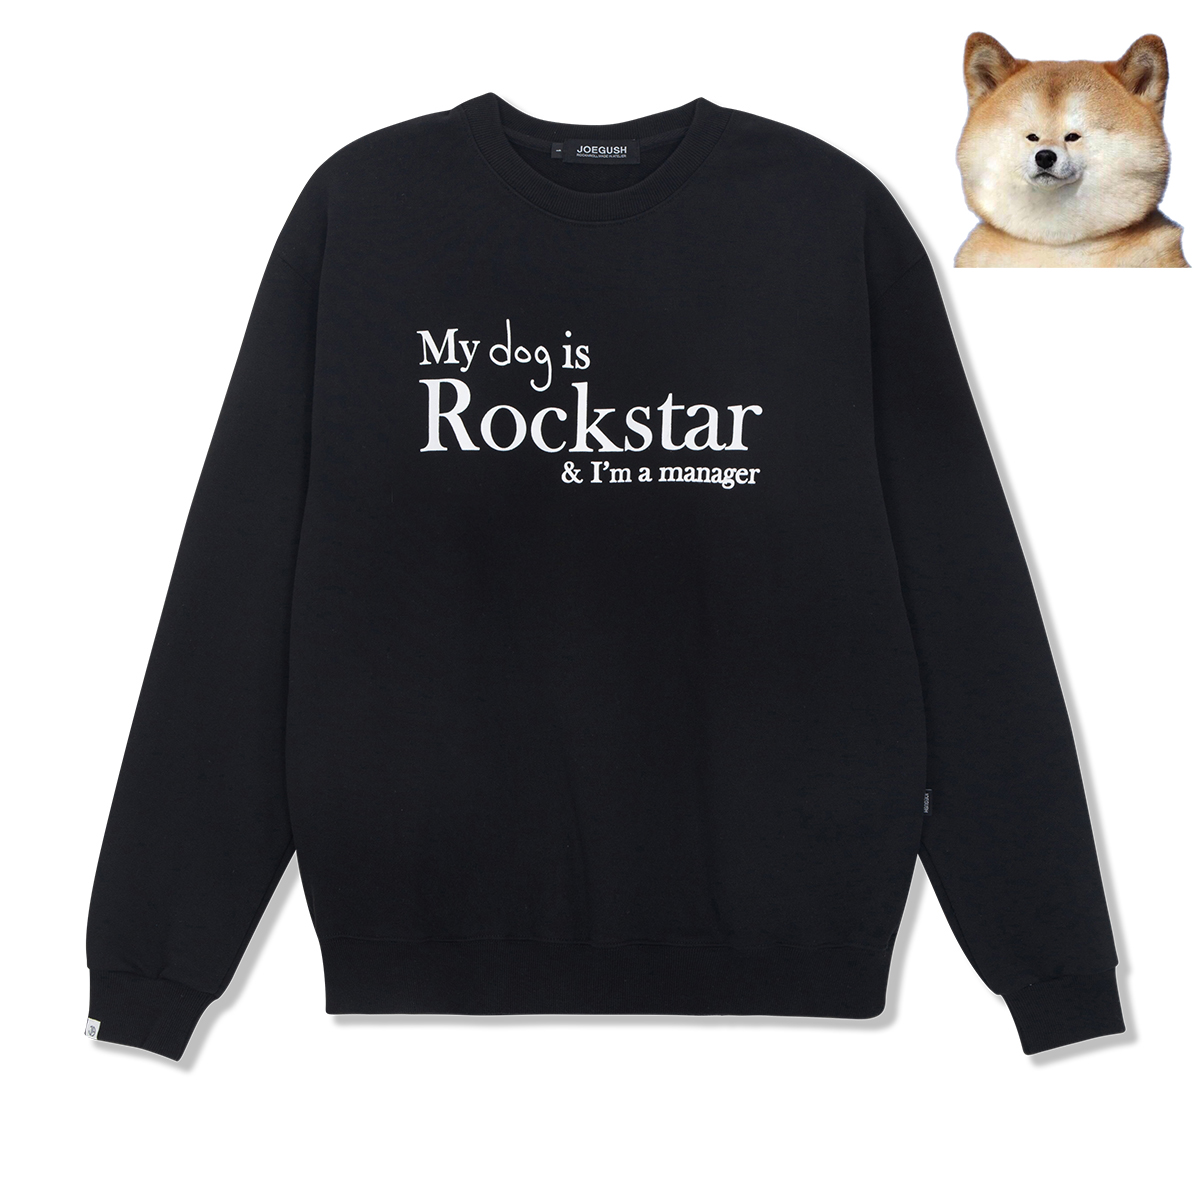 My dog is Rockstar Sweatshirts (Black)